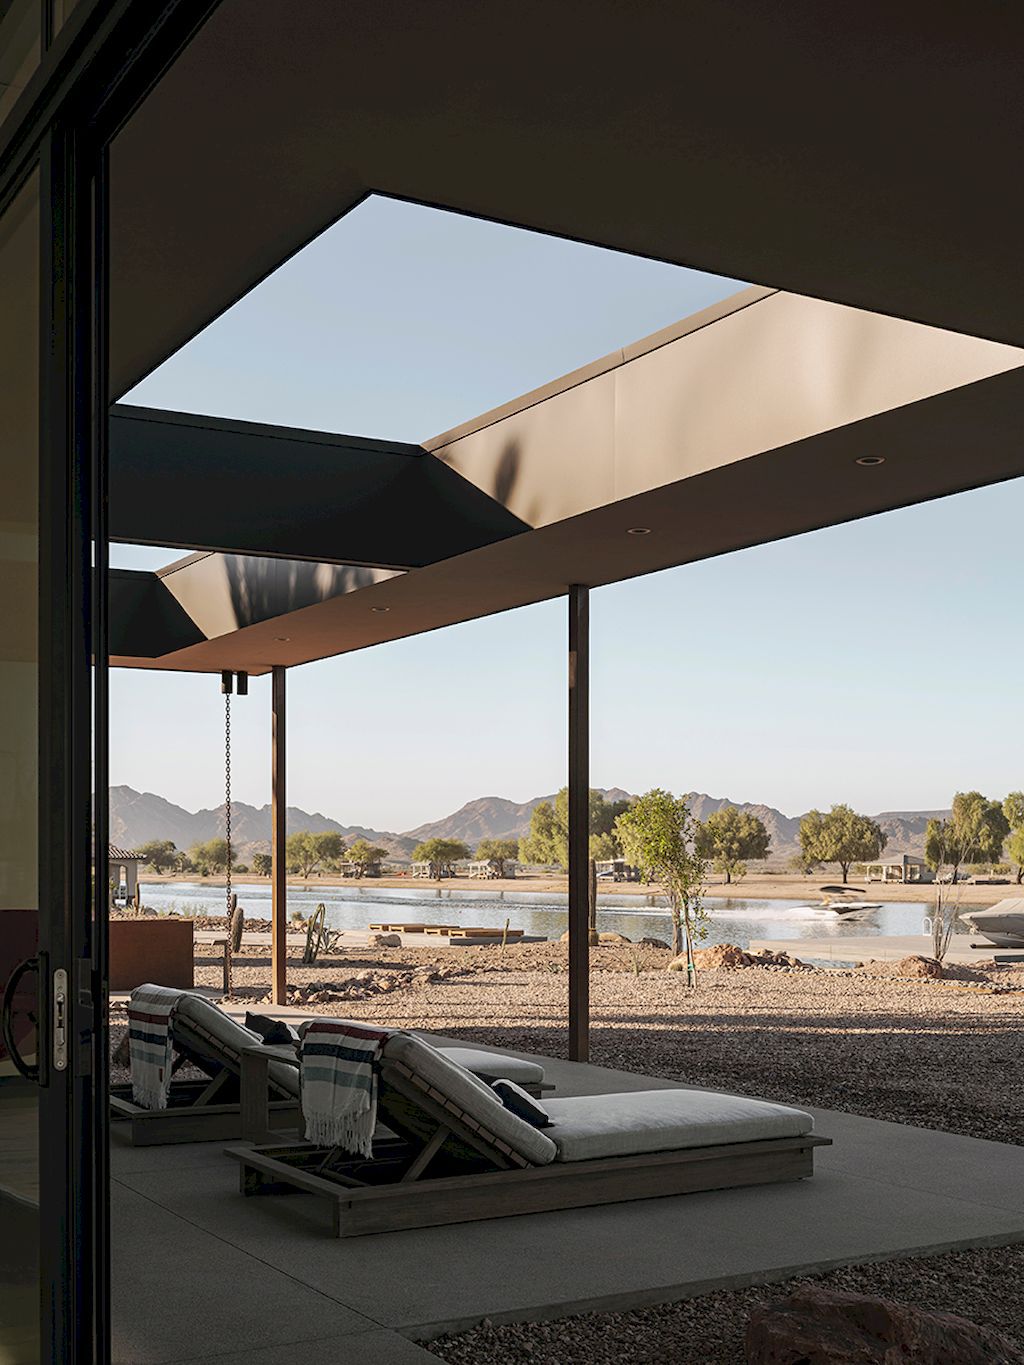 Ski Ranch House Adapts Desert yet Modern in Arizona by The Ranch Mine